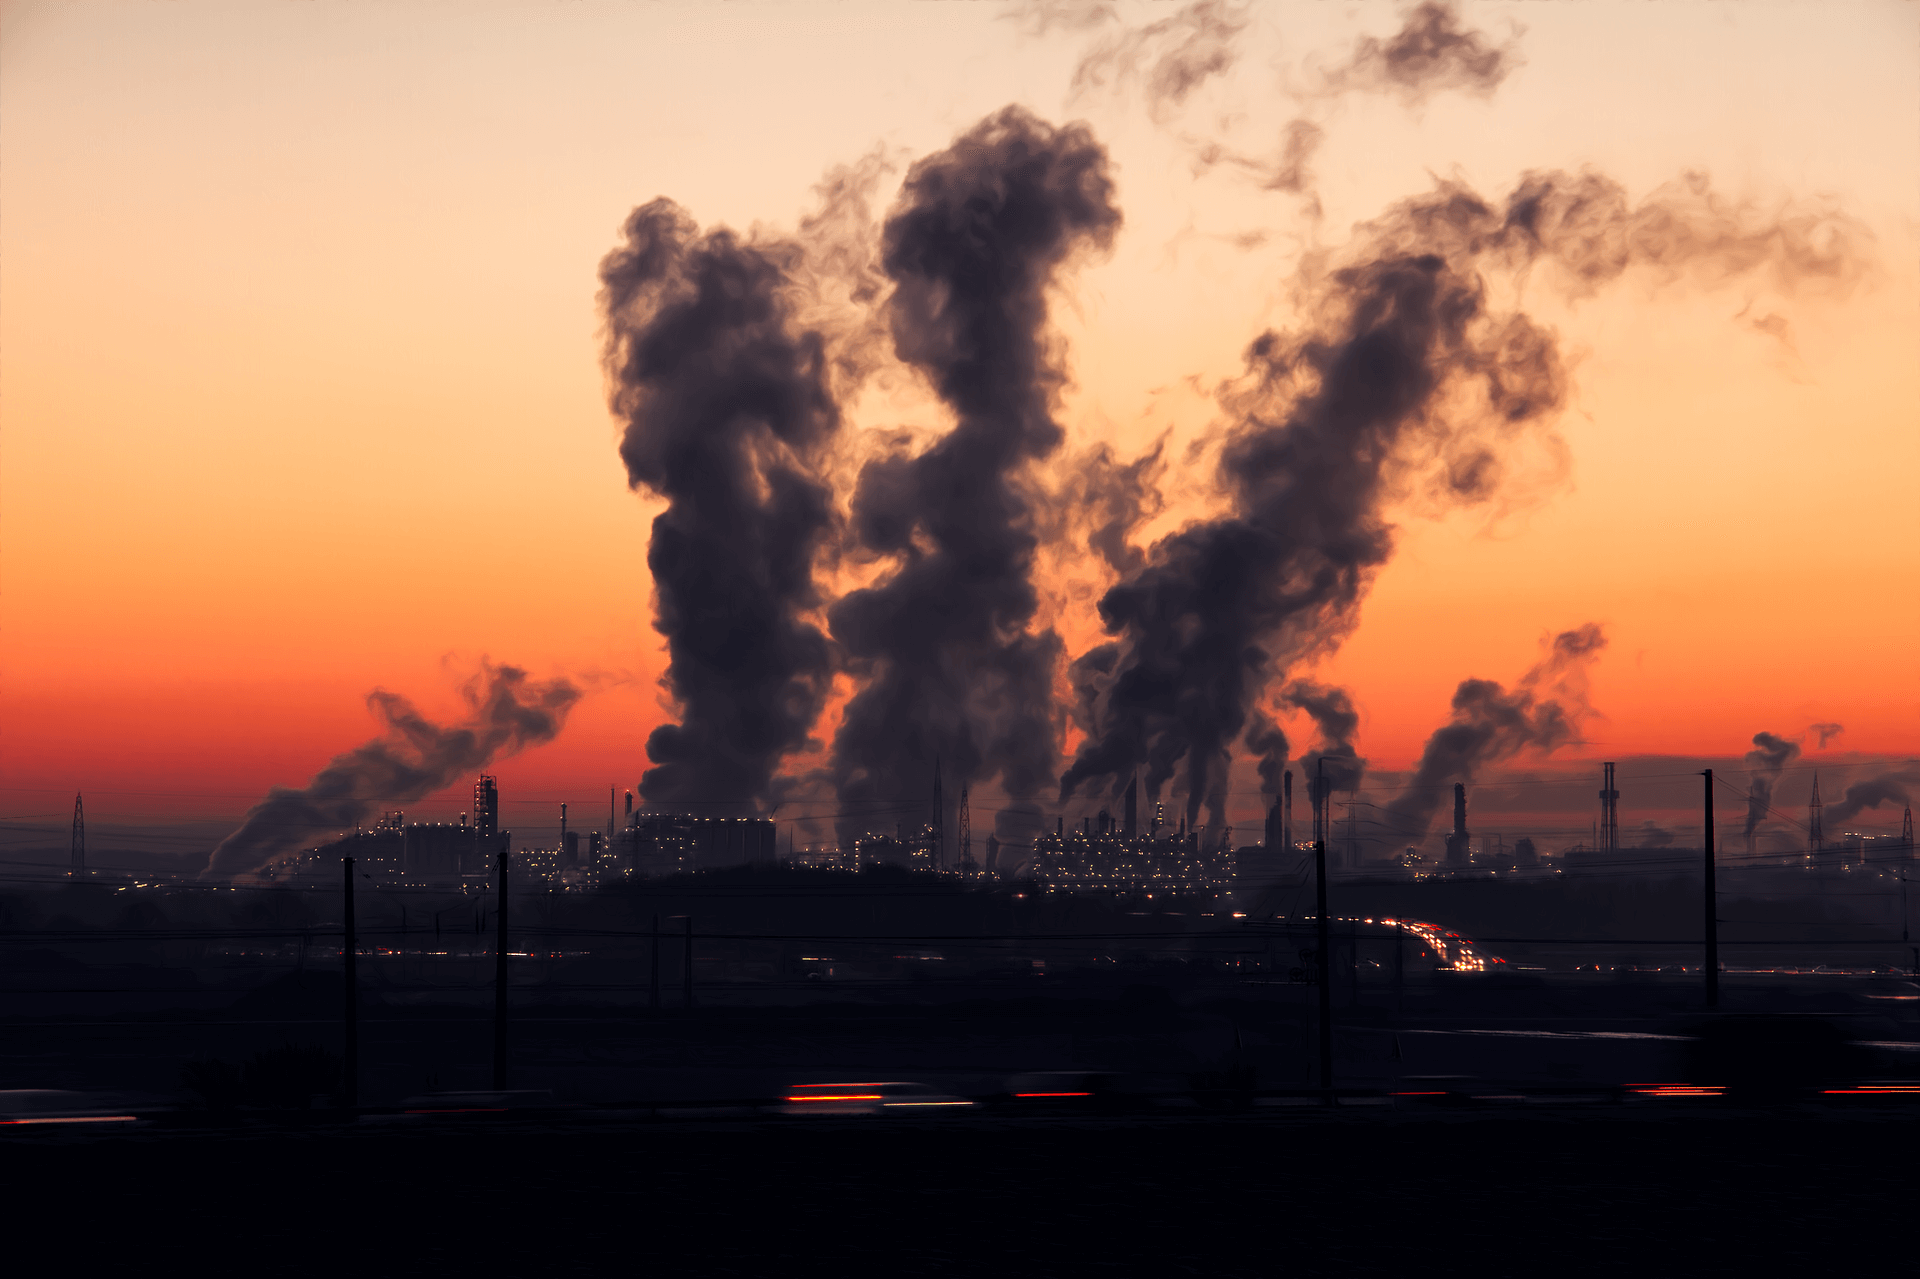 Bild der industriellen Umweltverschmutzung